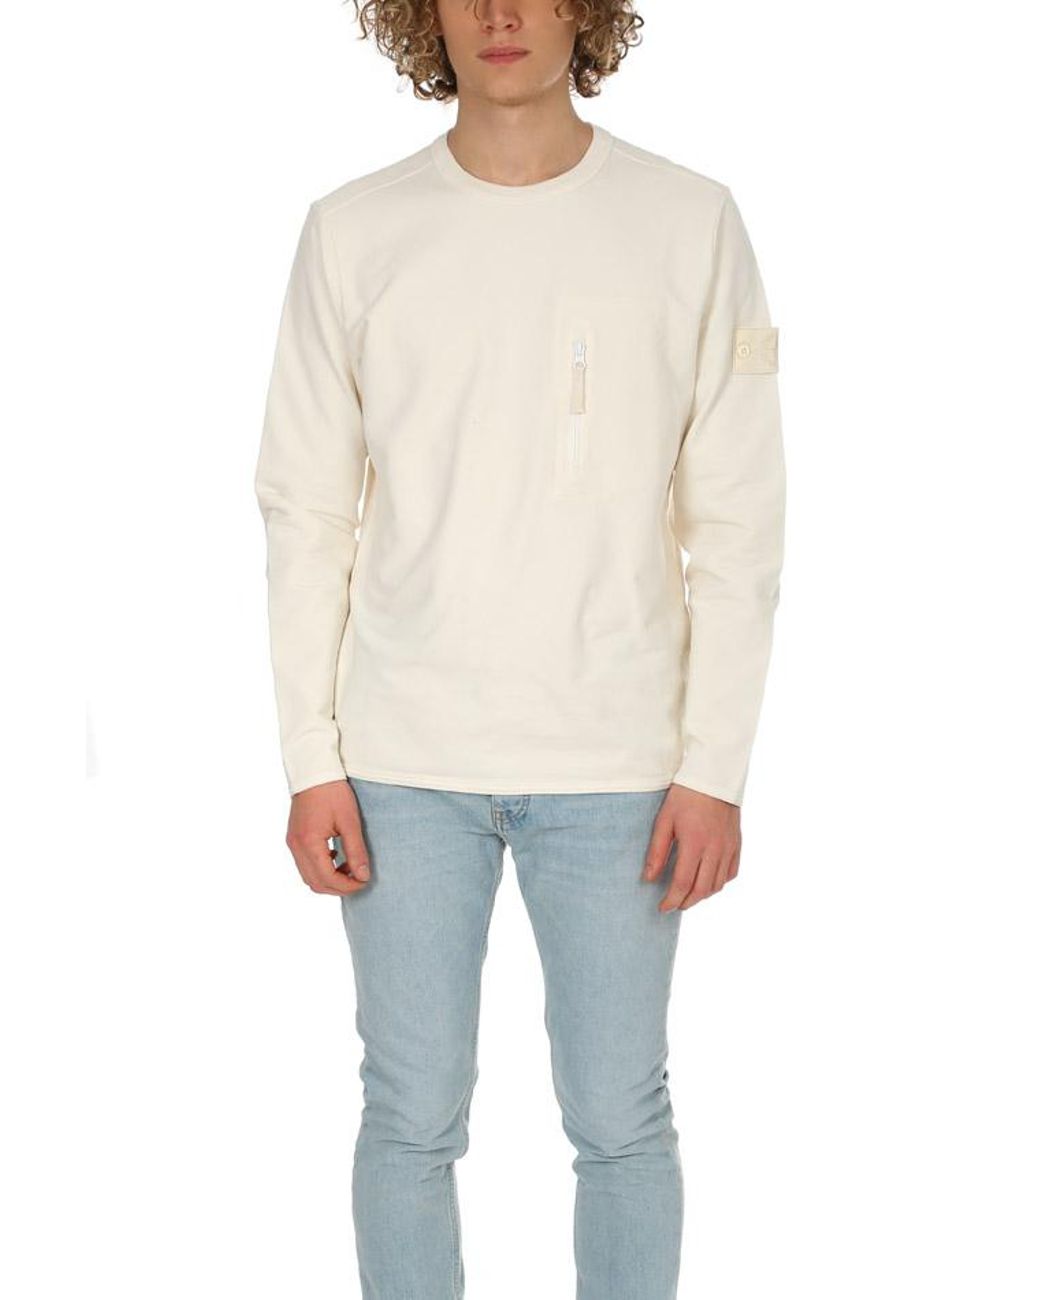 Stone Island Cotton Ghost Piece Sweatshirt in White for Men | Lyst